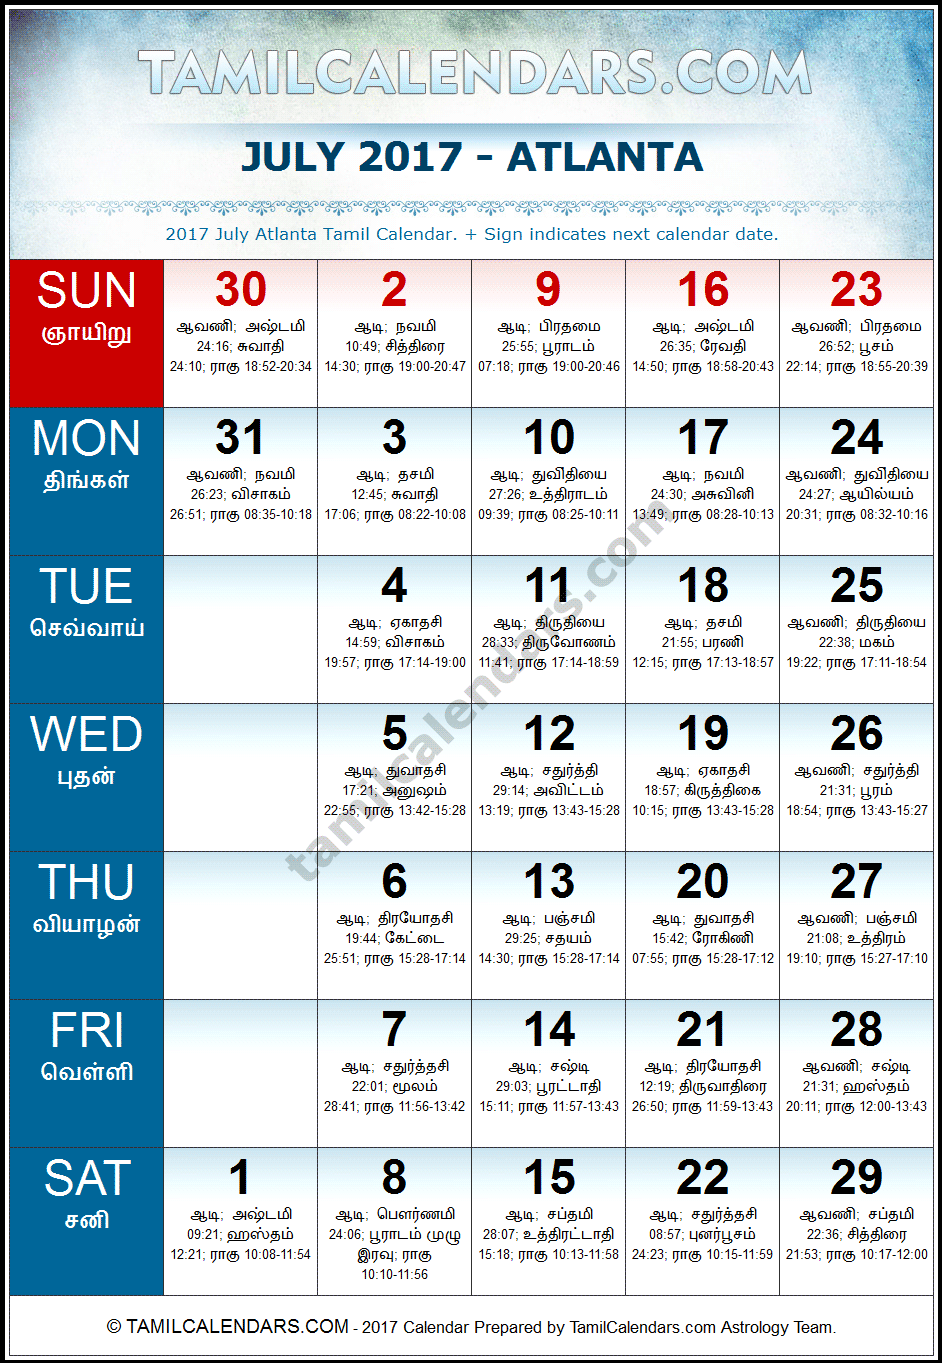 July 2017 Tamil Calendar for Atlanta, USA